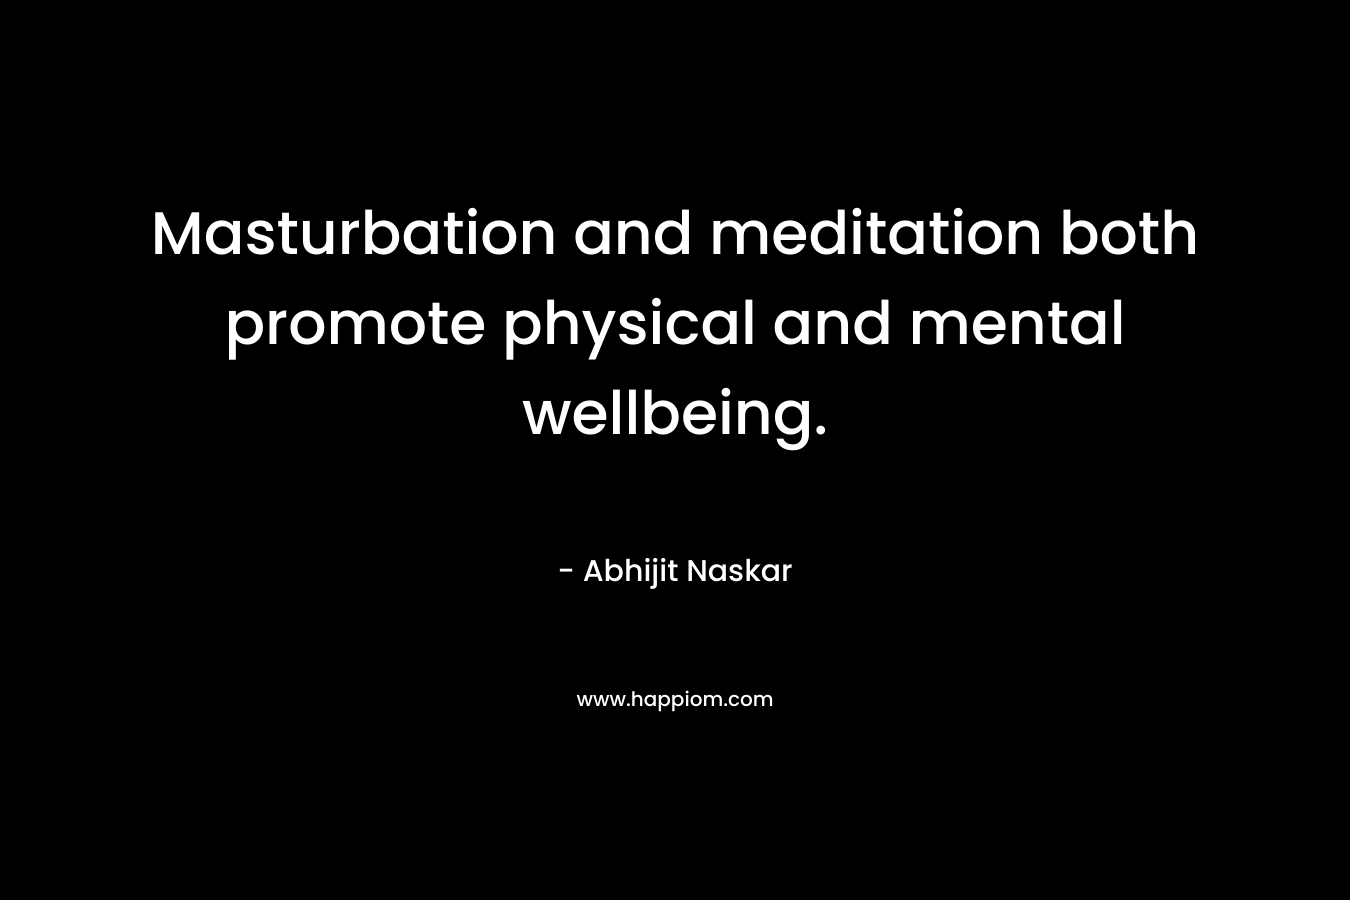 Masturbation and meditation both promote physical and mental wellbeing. – Abhijit Naskar